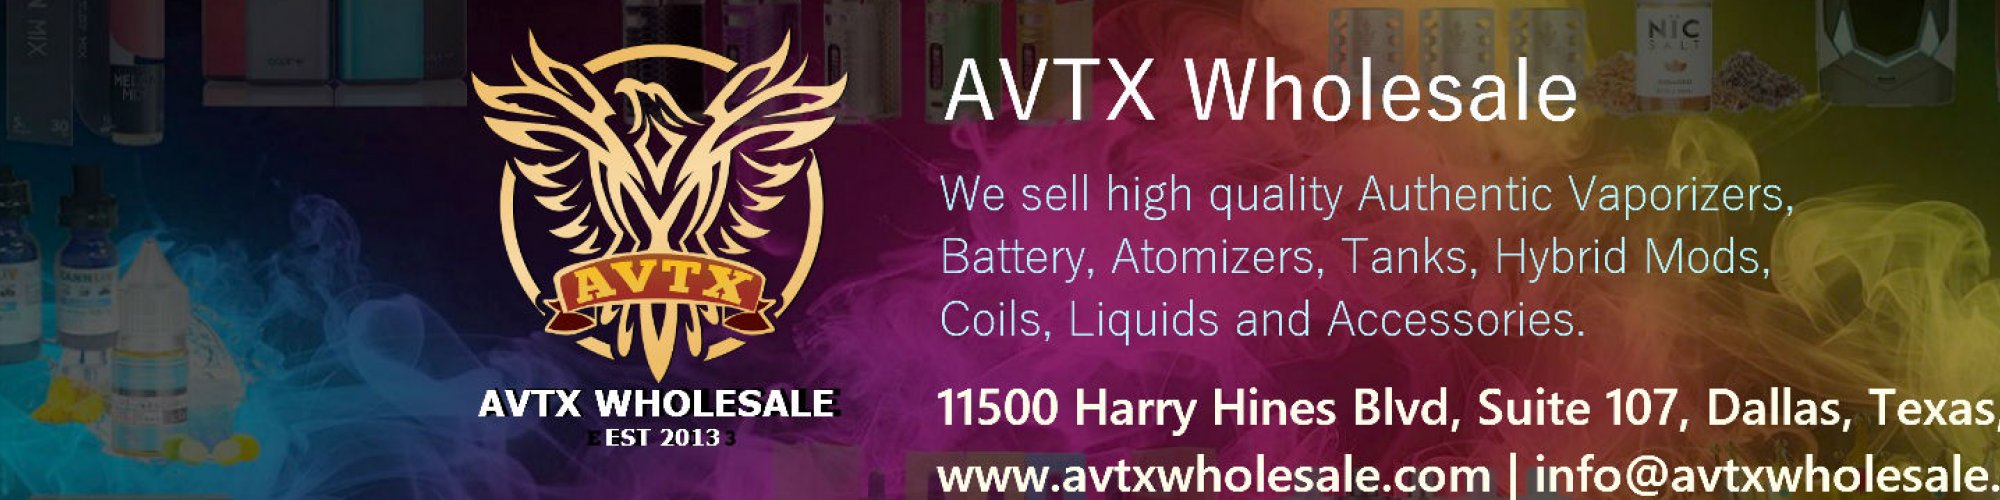 AVTX Wholesale